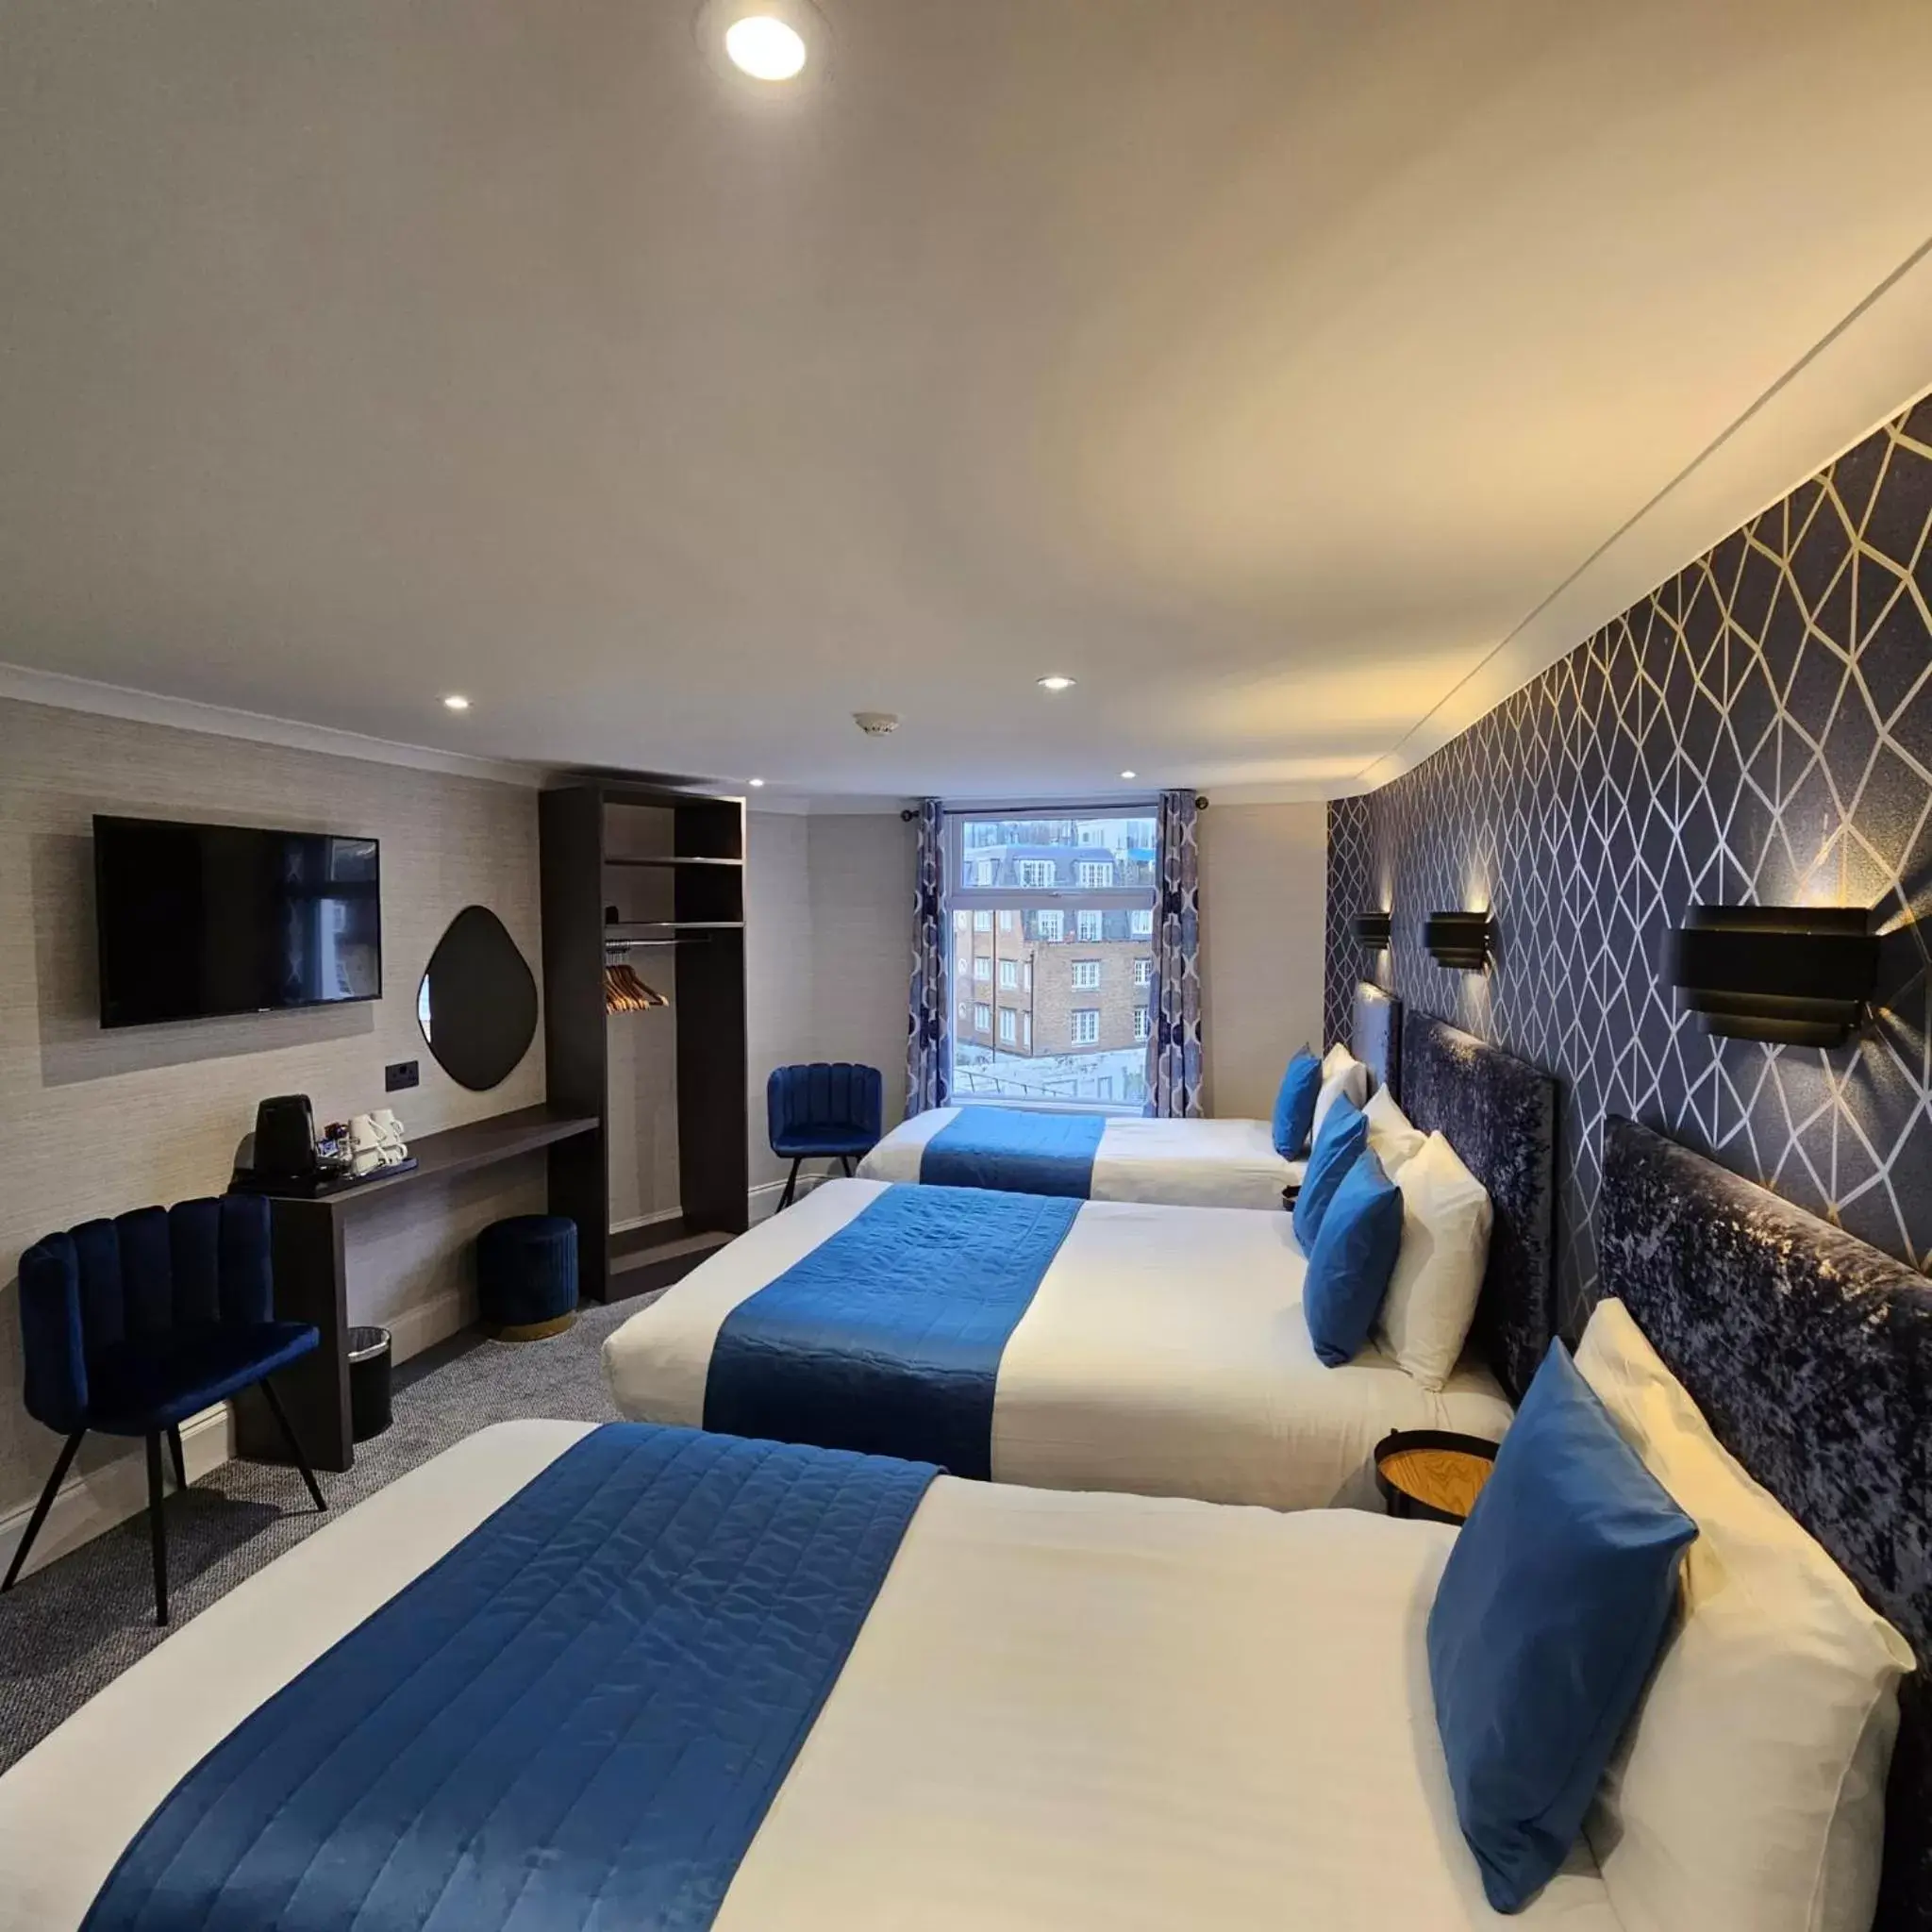 Bedroom in Mentone Hotel